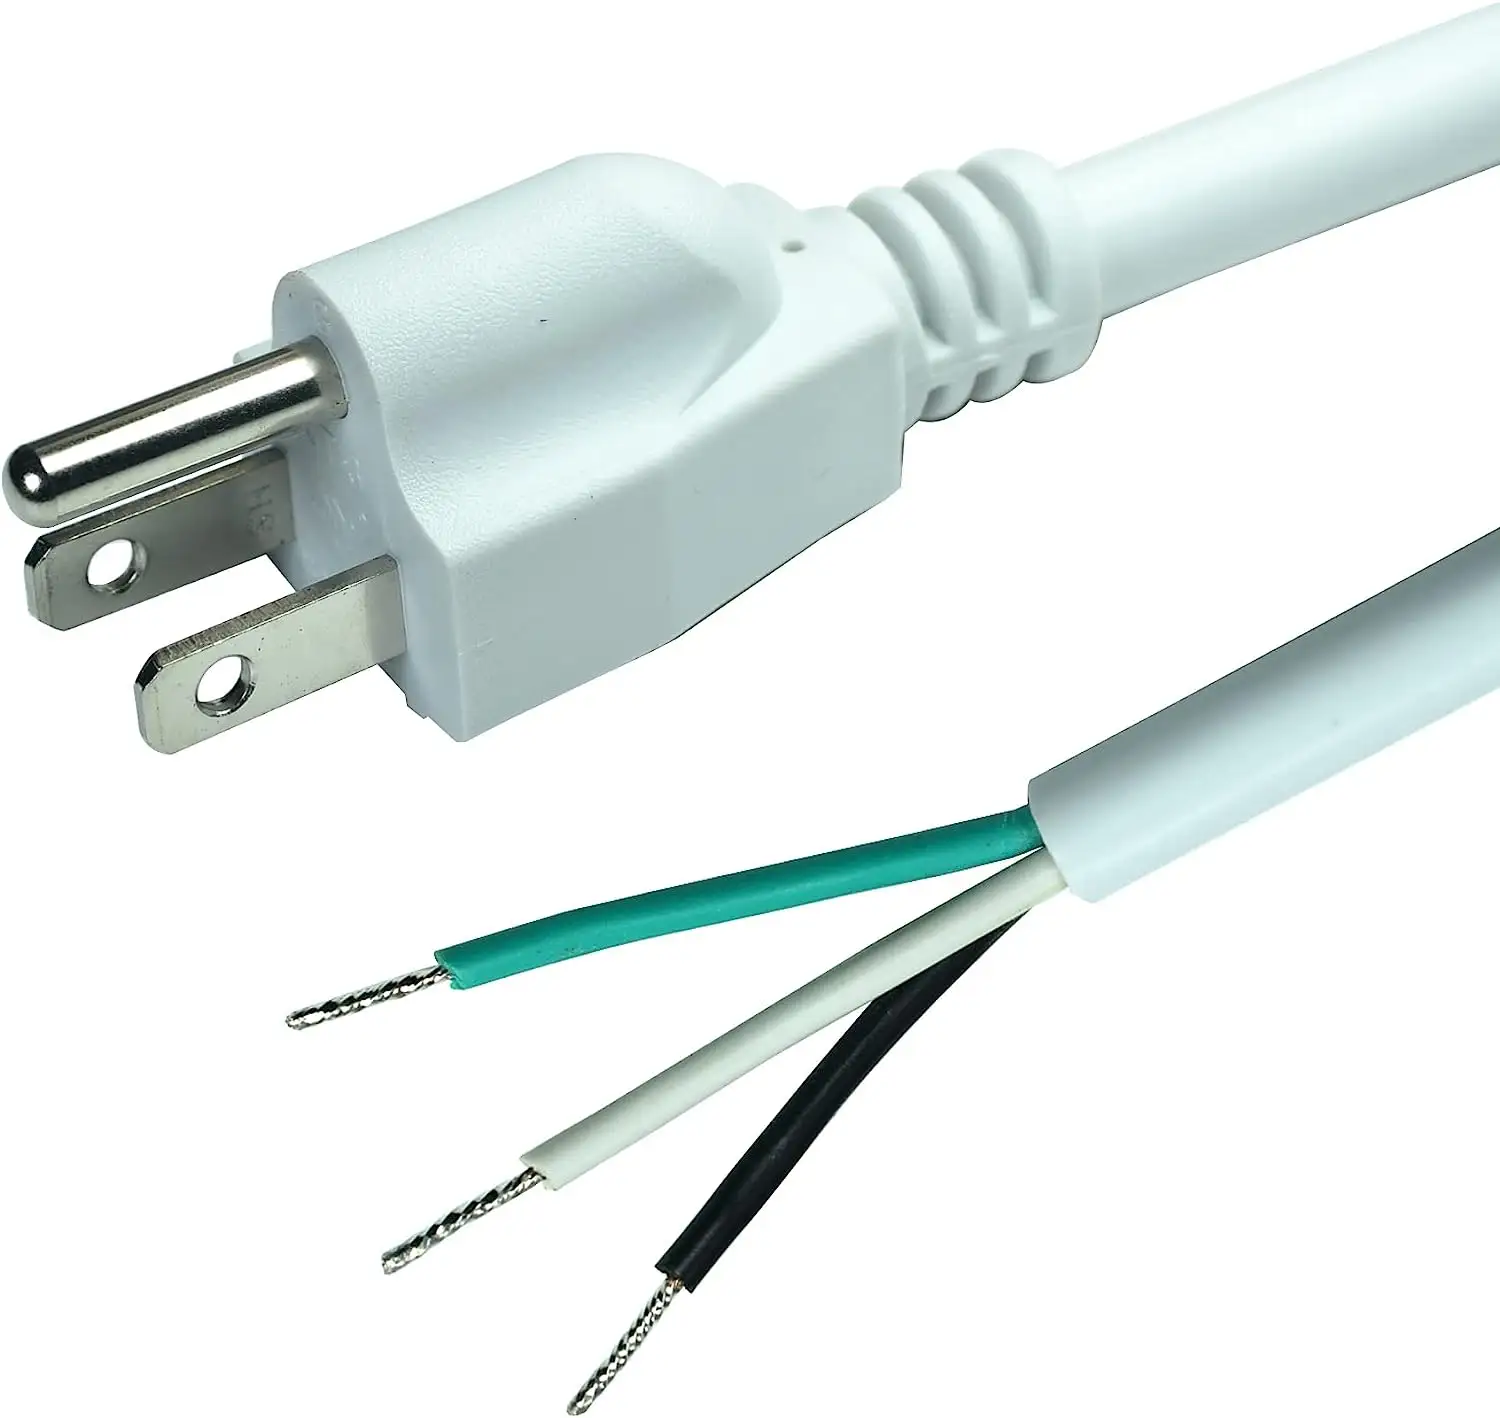 Huan chain 3-poliger Stecker Netz kabel Pigtail Heavy Duty 14 Gauge 3-polig 6 Fuß NEMA 5-15P Open End Weiße Farbe